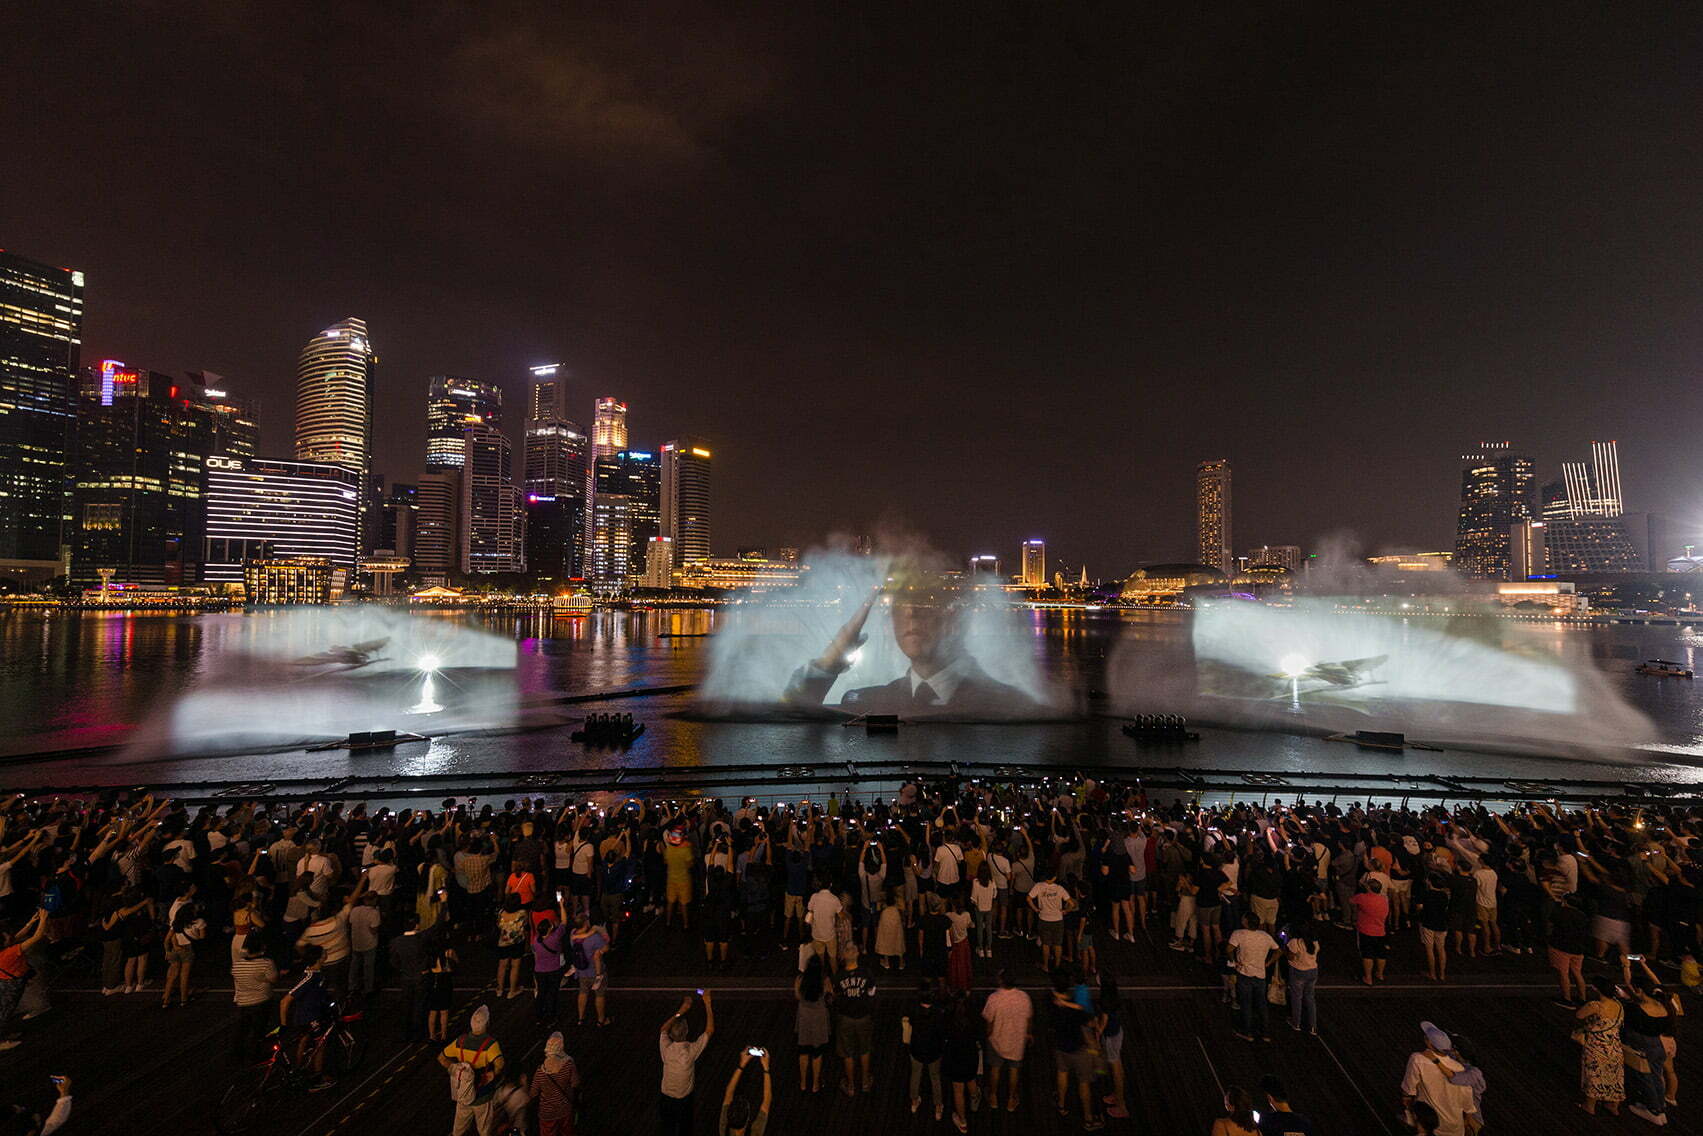 Top Gun: Maverick – A Light, Water & Pyrotechnic Extravaganza at Marina Bay Sands